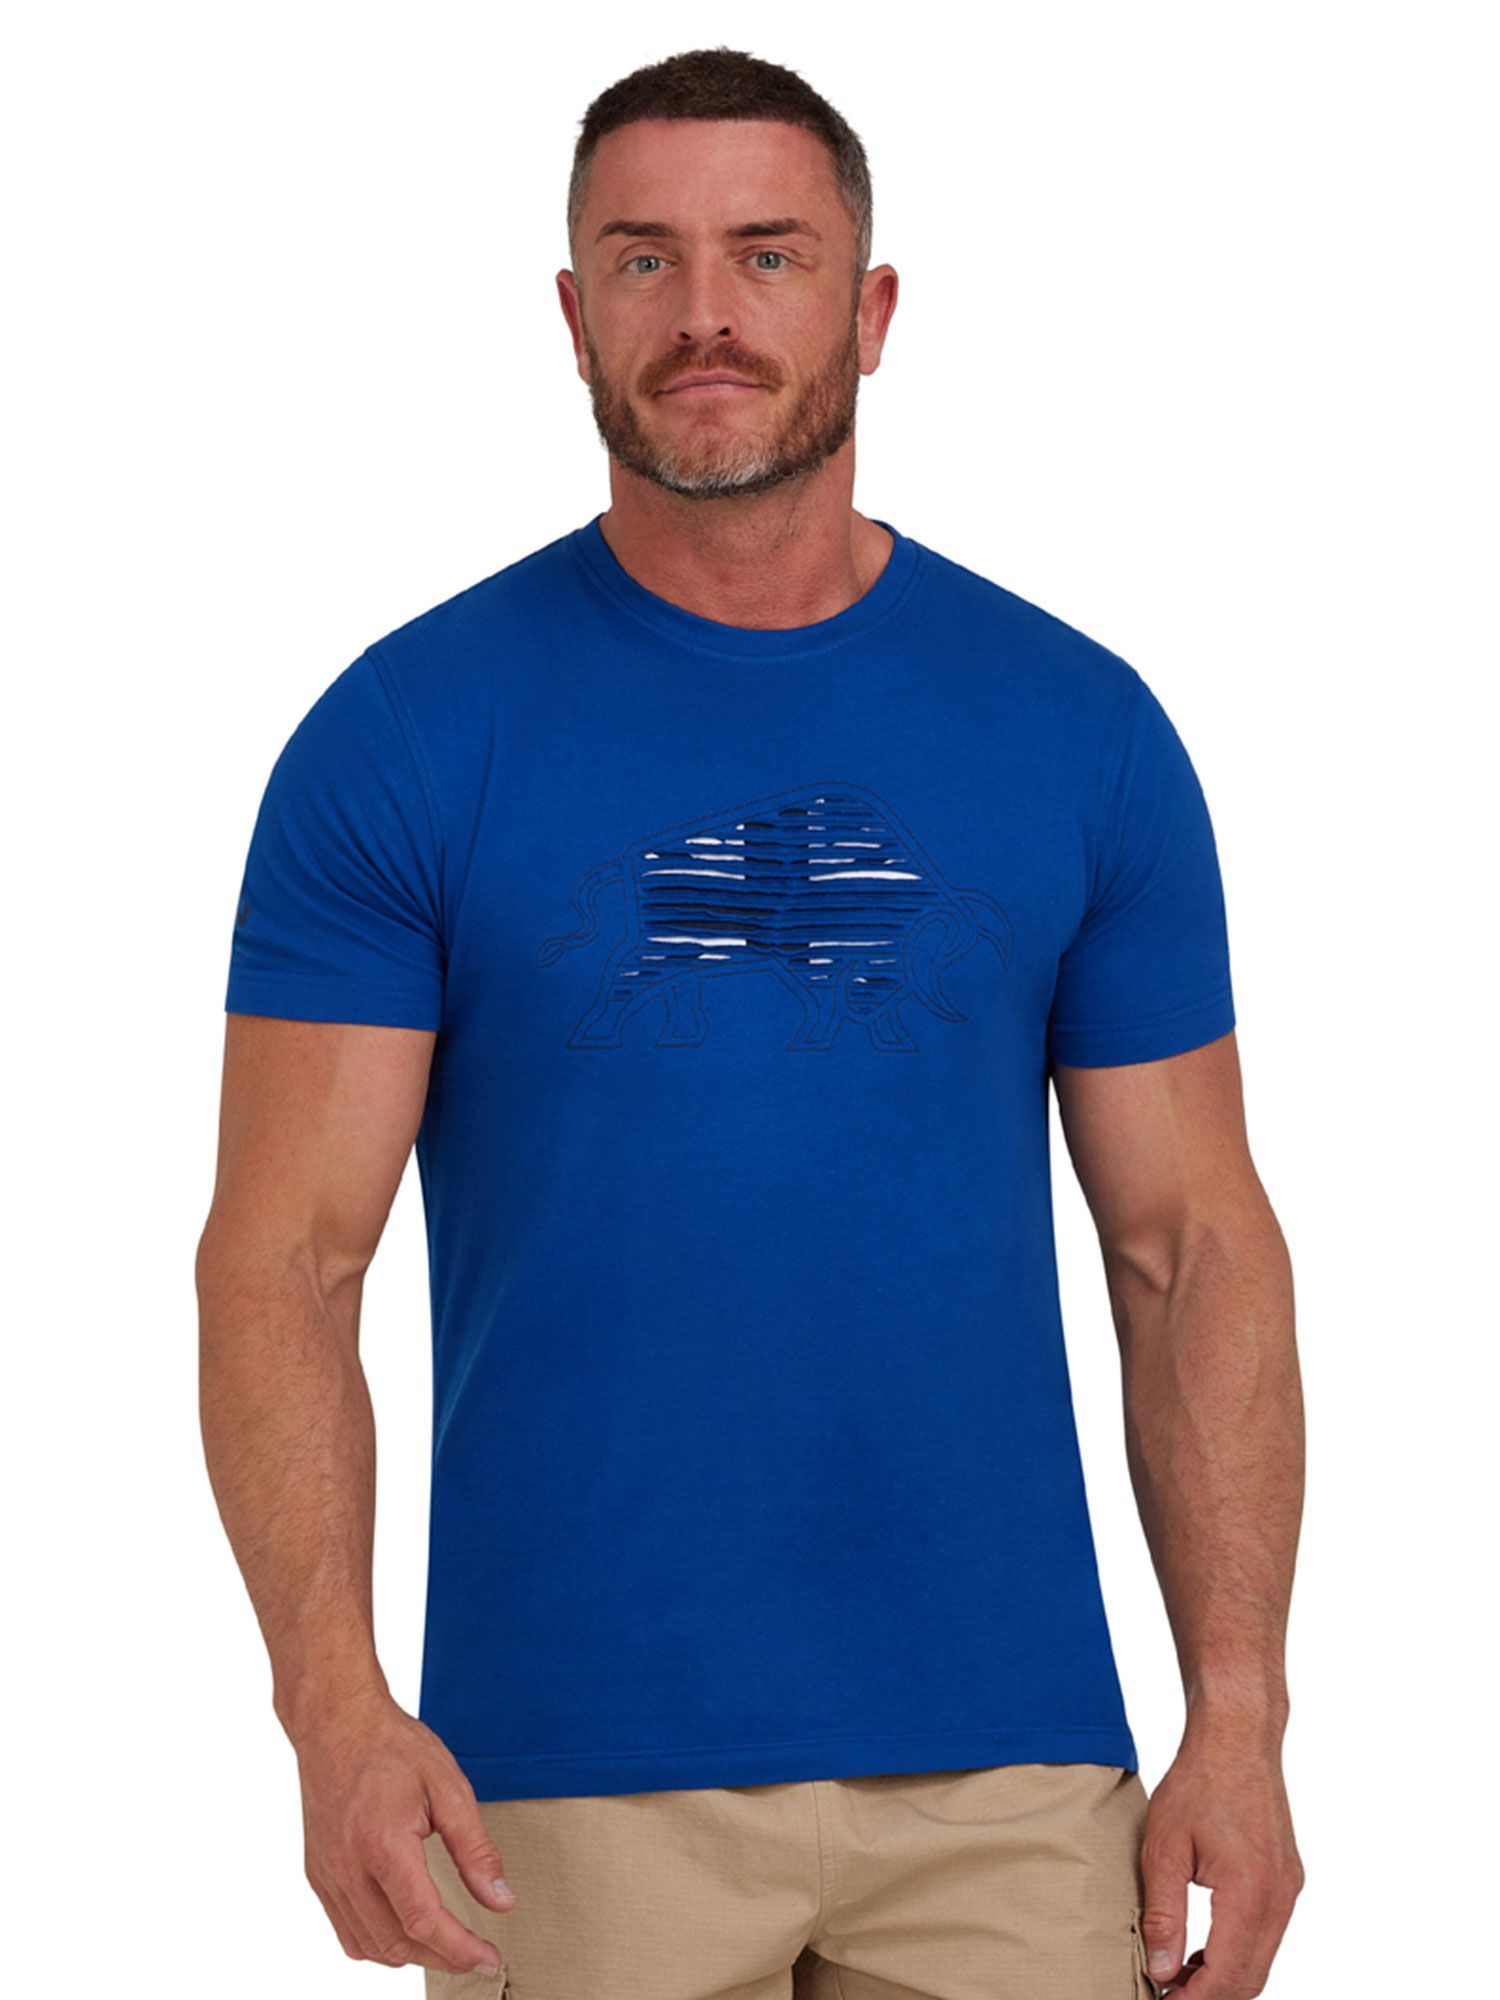 Raging Bull Slash Bull Graphic T-Shirt, Cobalt Blue, XL